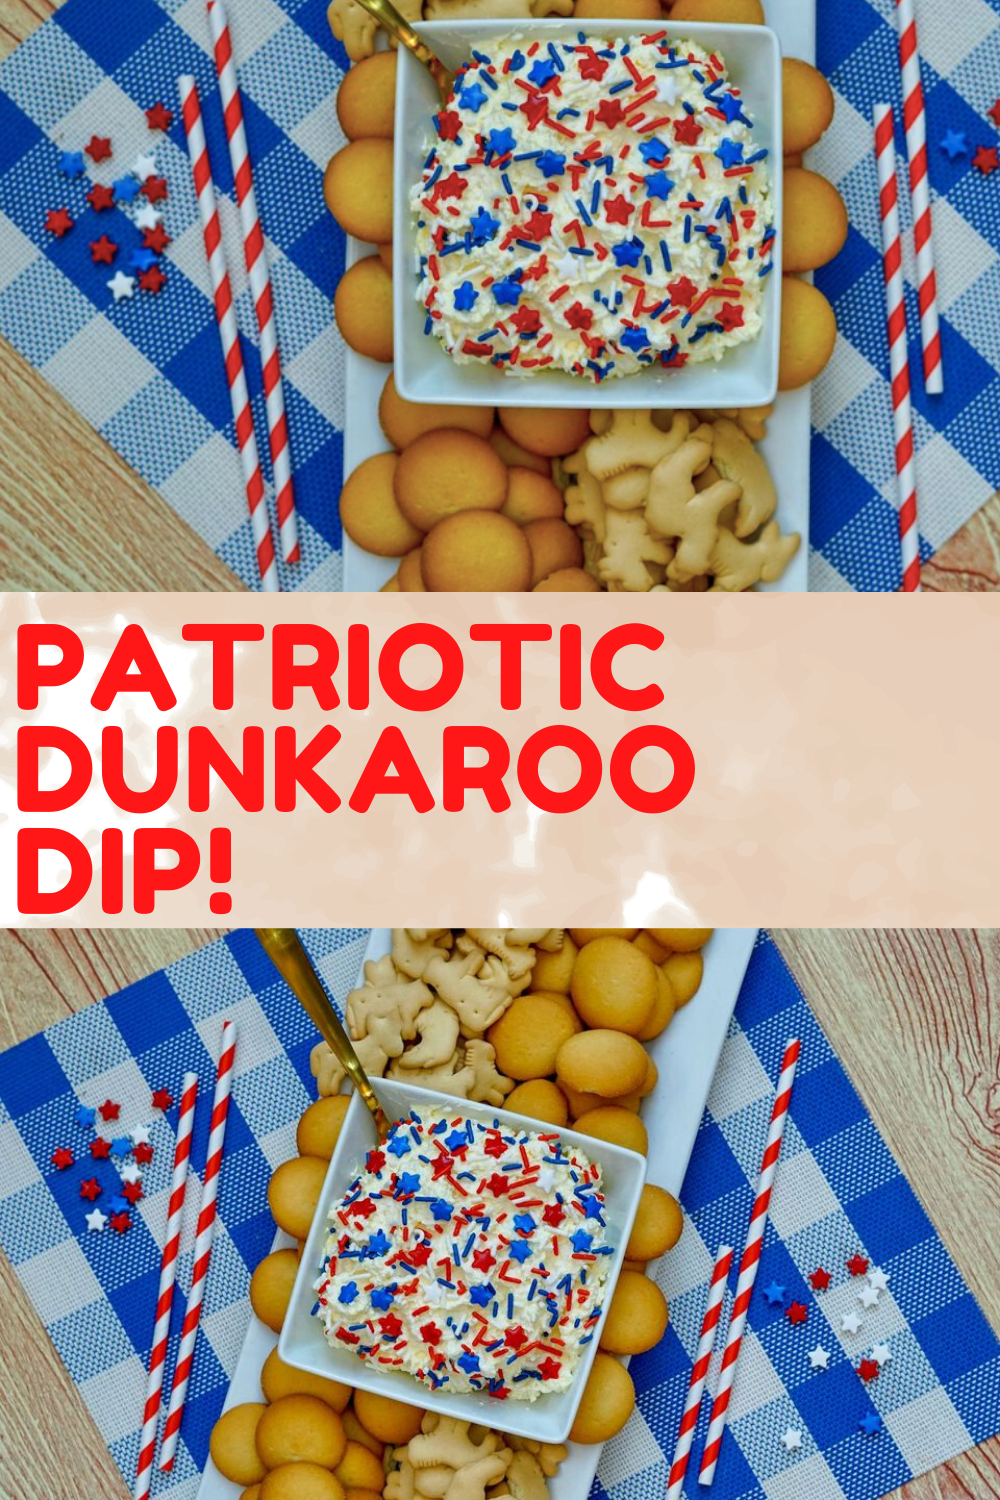 Patriotic Dunkaroo Dip Recipe!